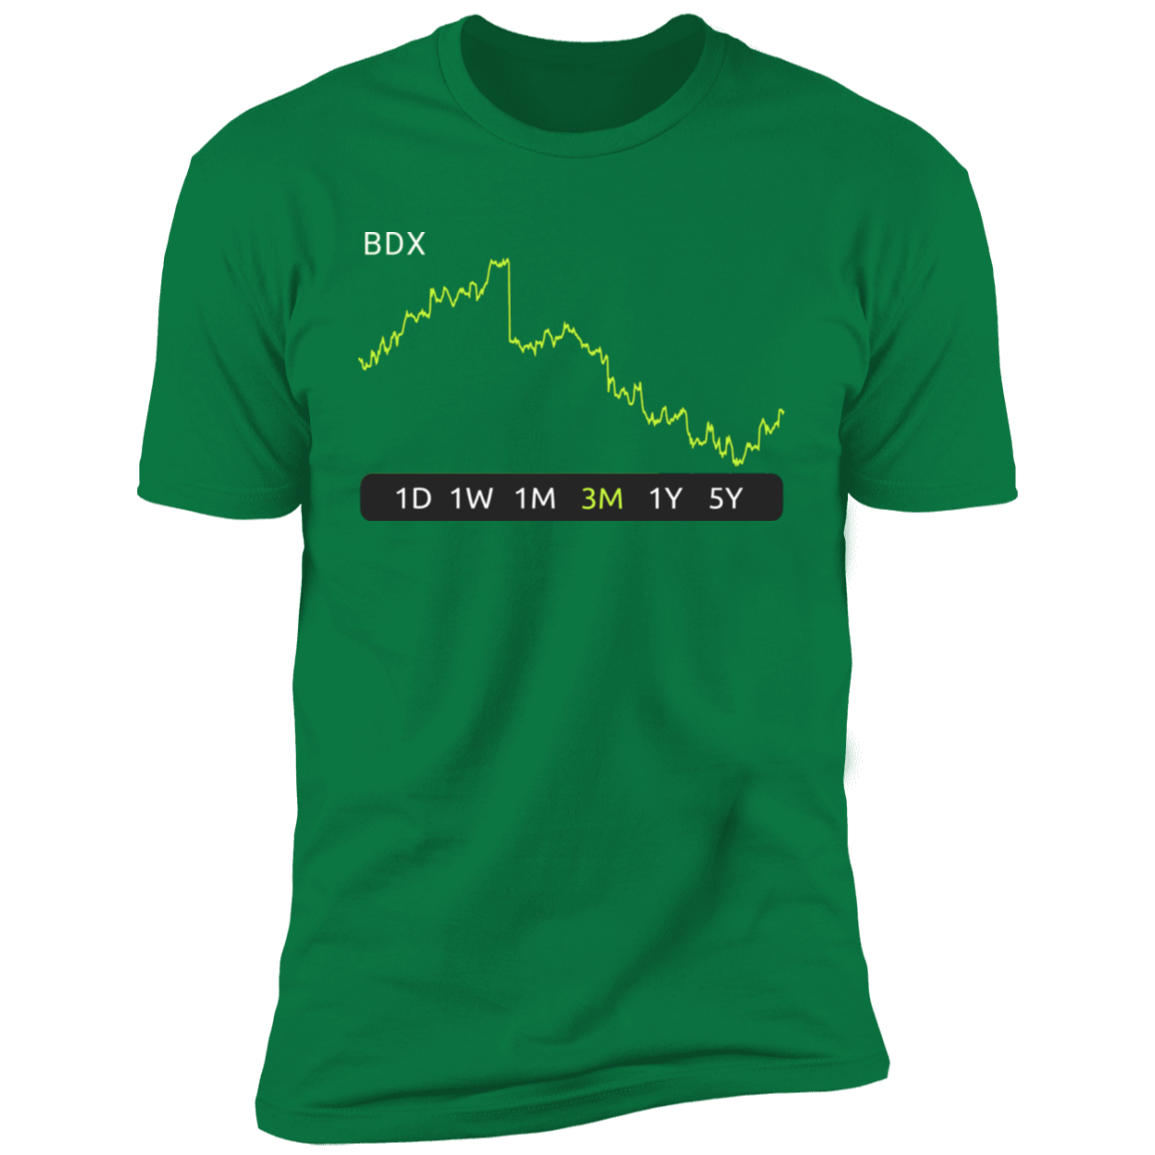 DBX Stock 3m Premium T-Shirt